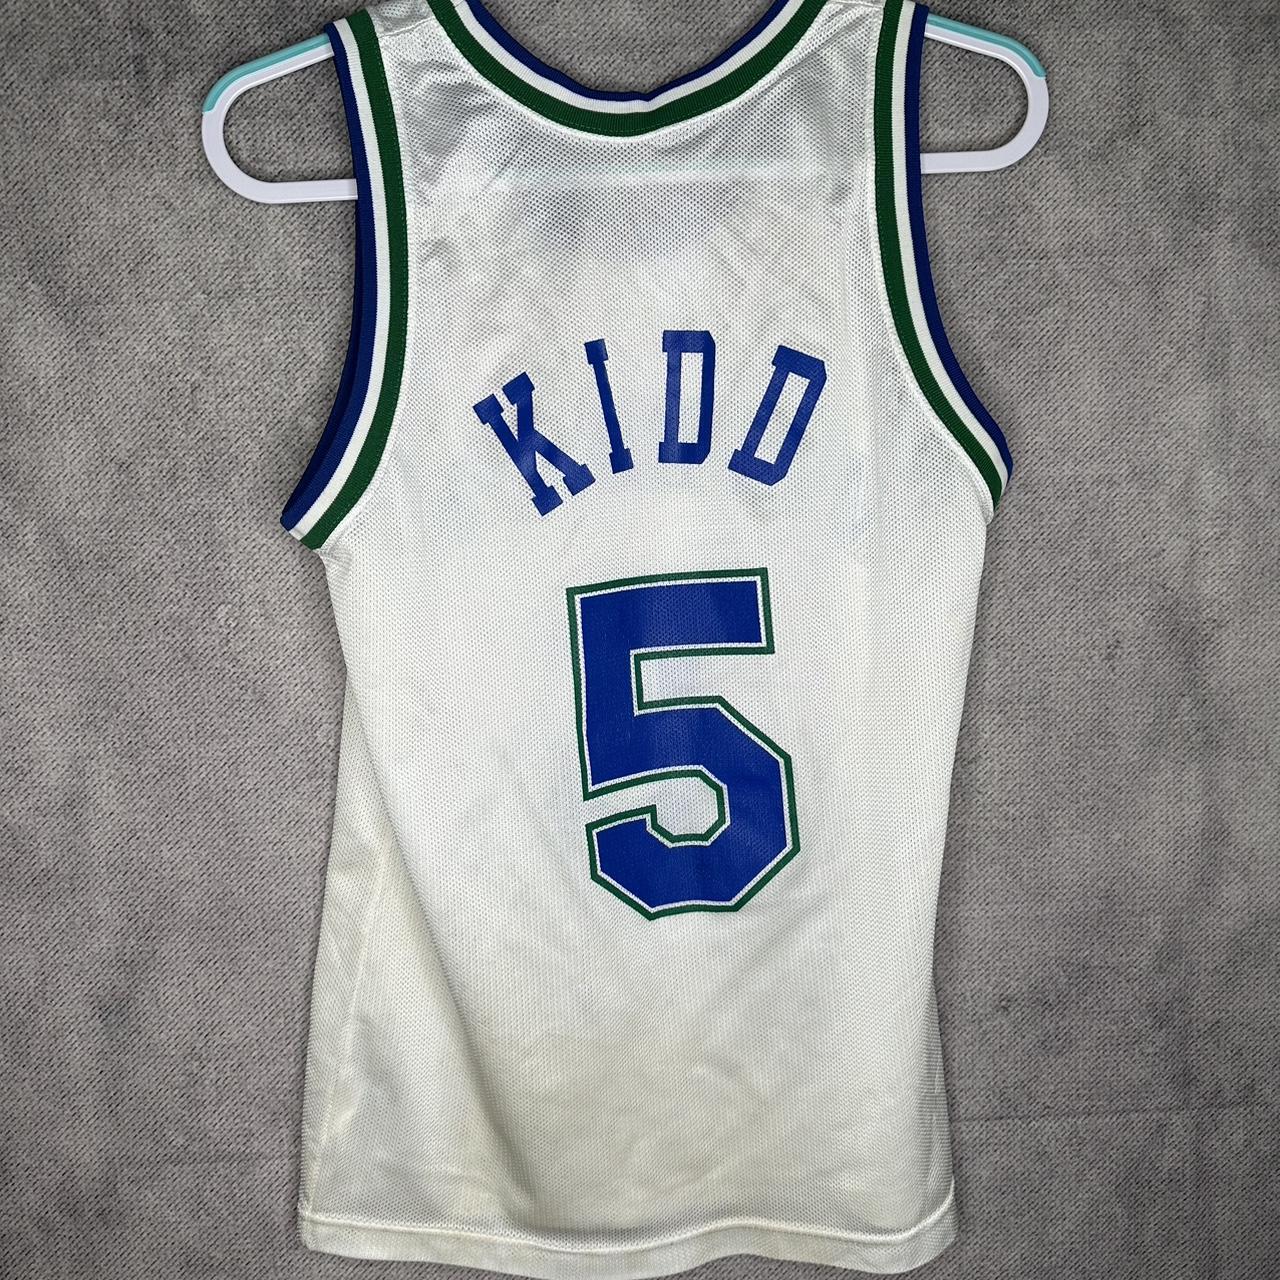 Jason Kidd Vintage Champion Dallas Mavericks Jersey Size 36 Small Blue